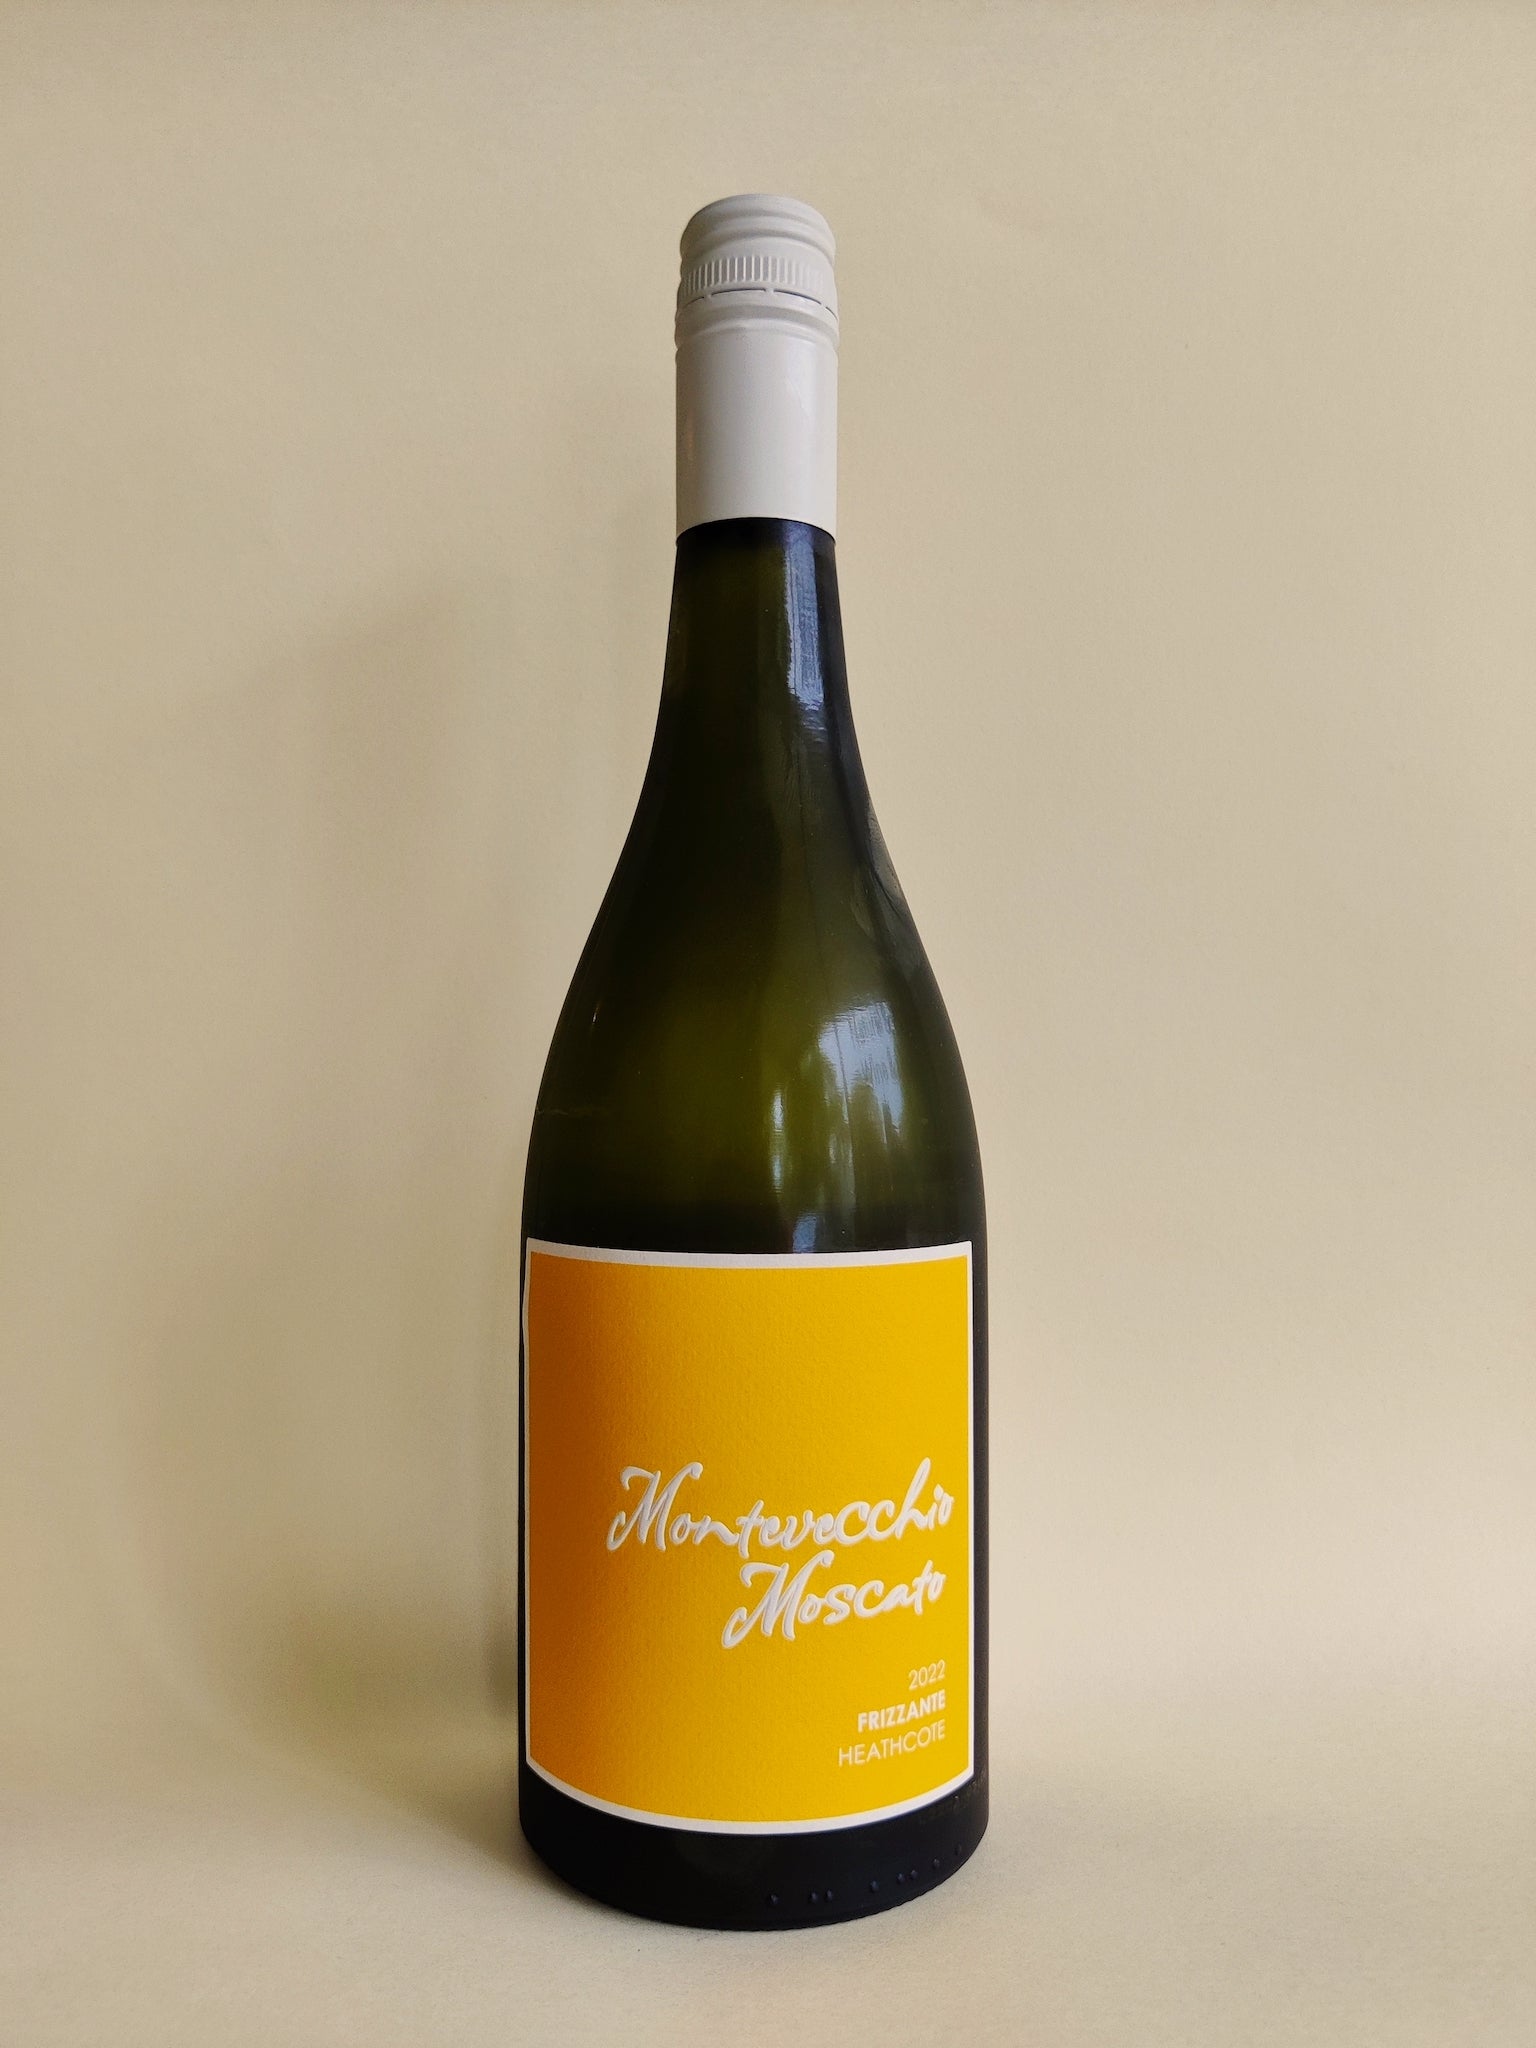 A bottle of Montevecchio Moscato from Heathcote, Victoria. 